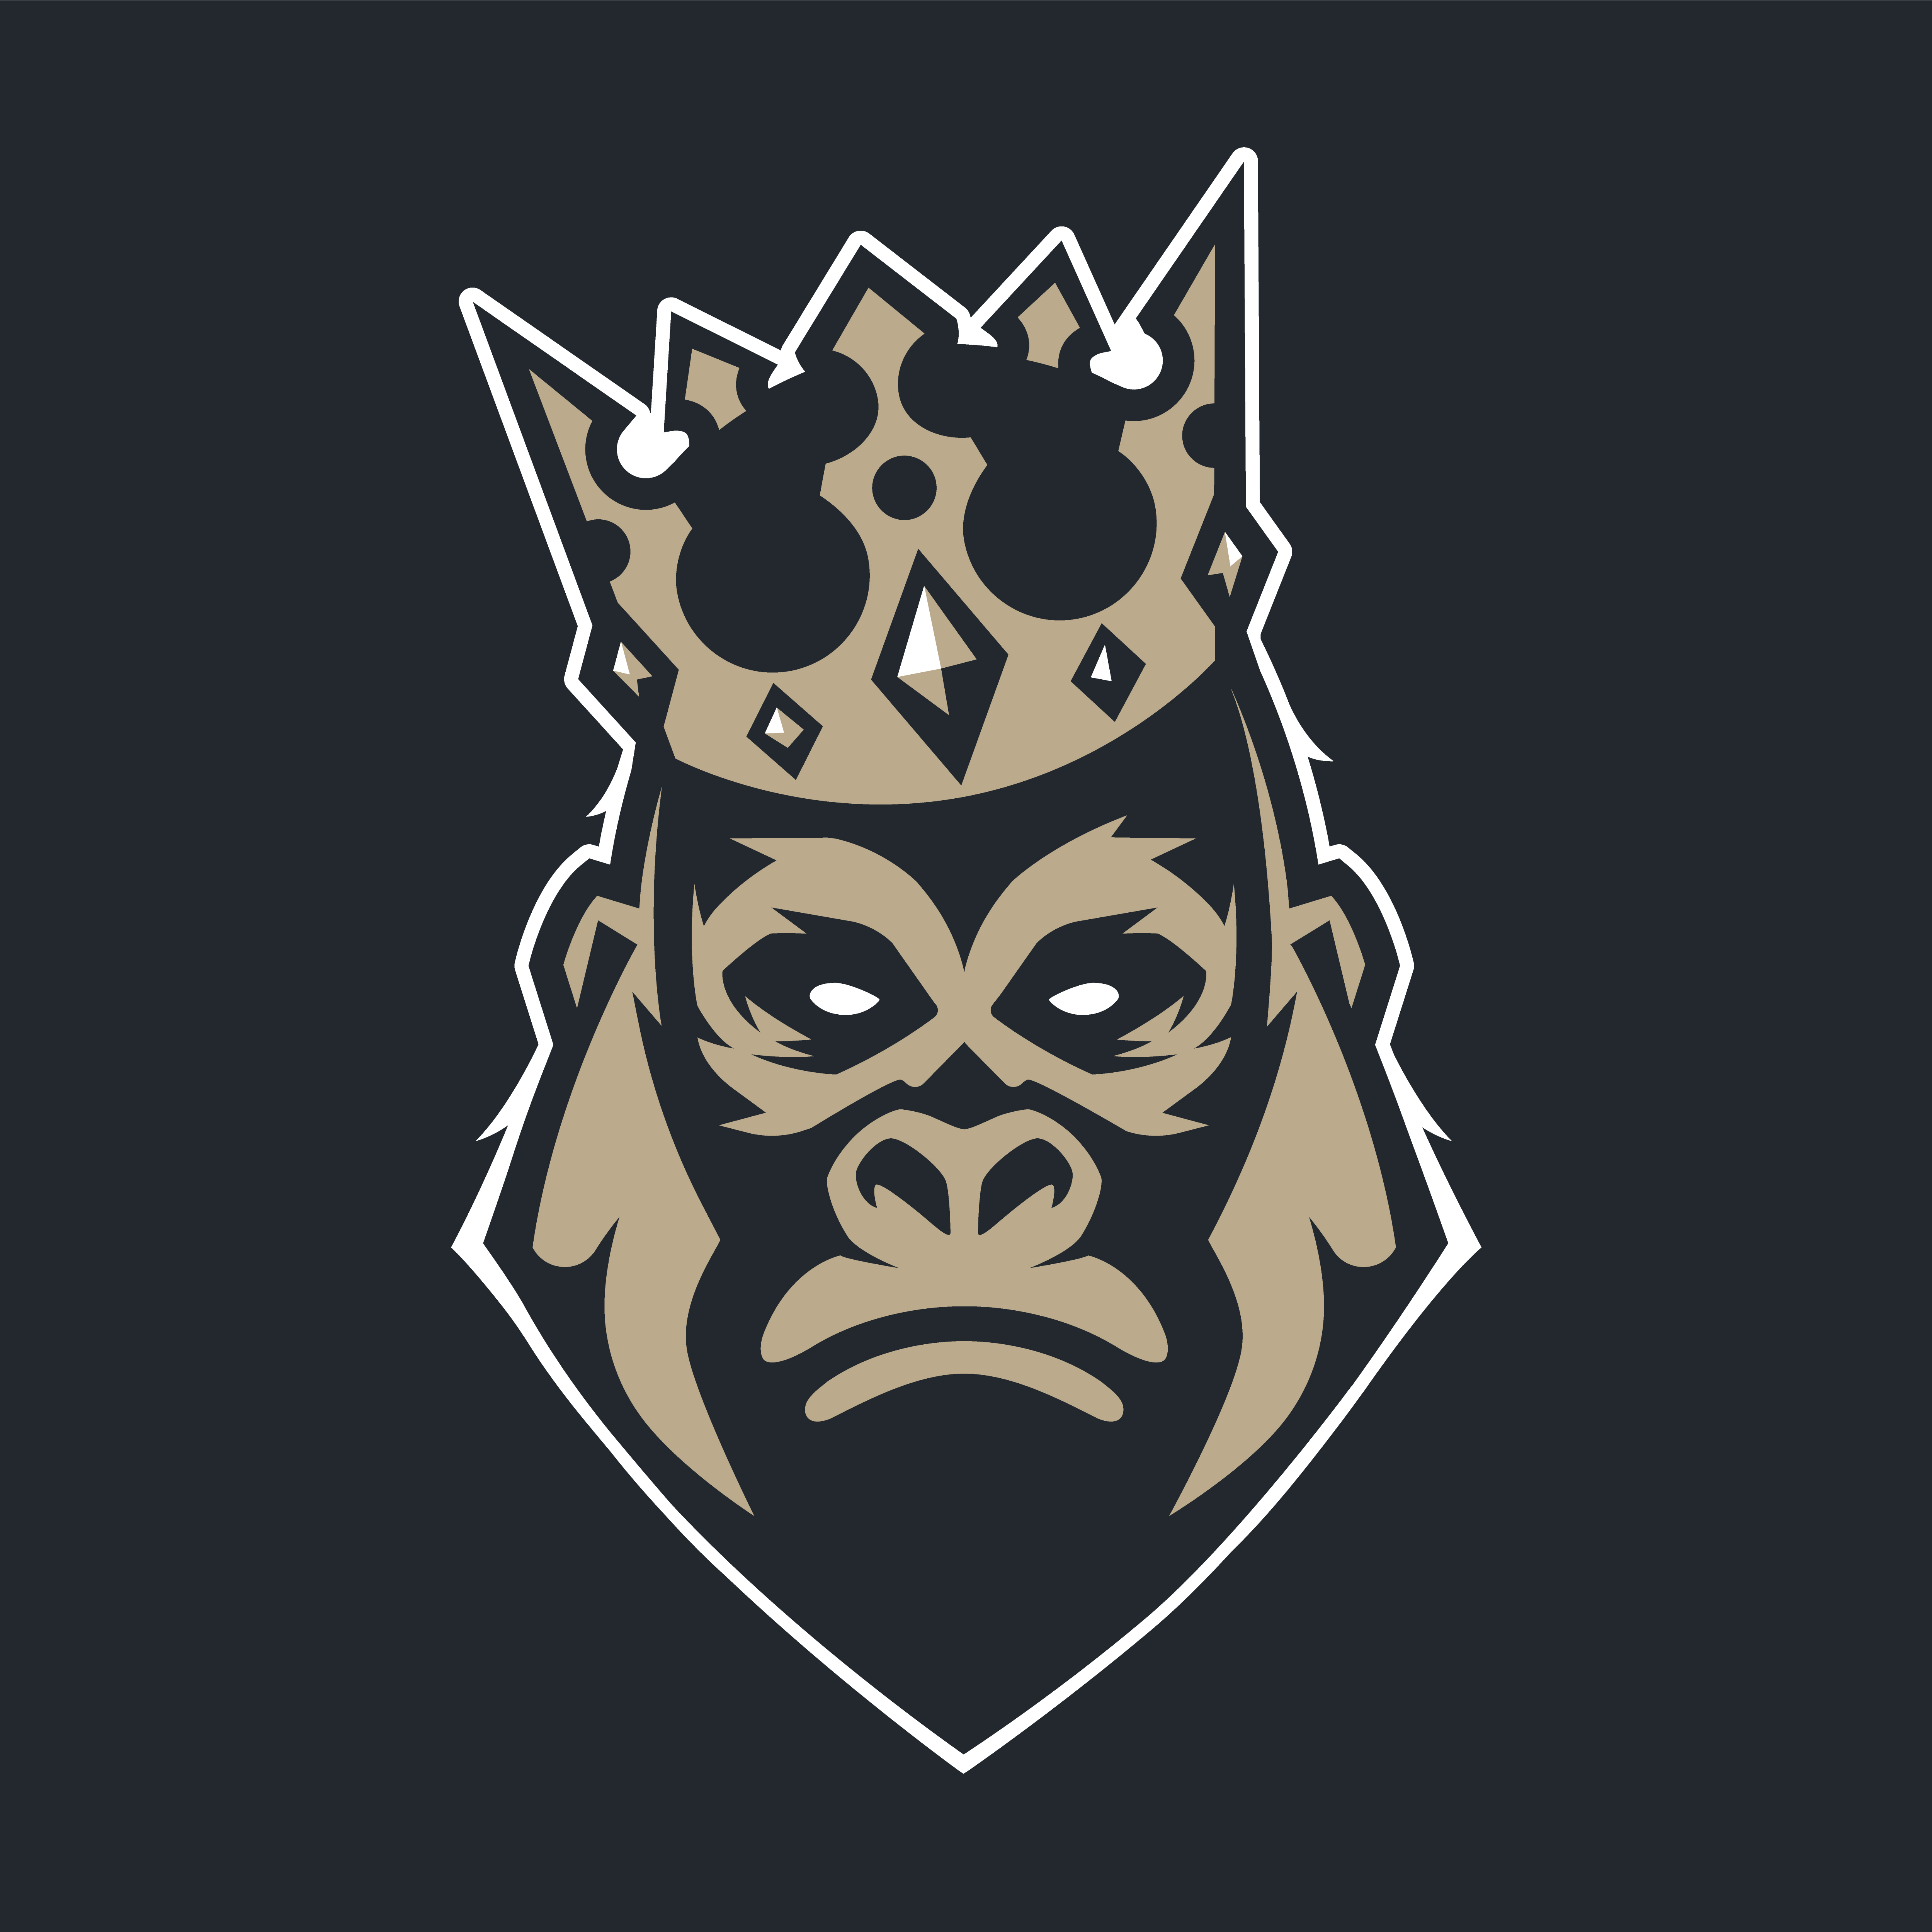 Gorilla in Crown Mascot Vector Icon 333973 - Download Free Vectors